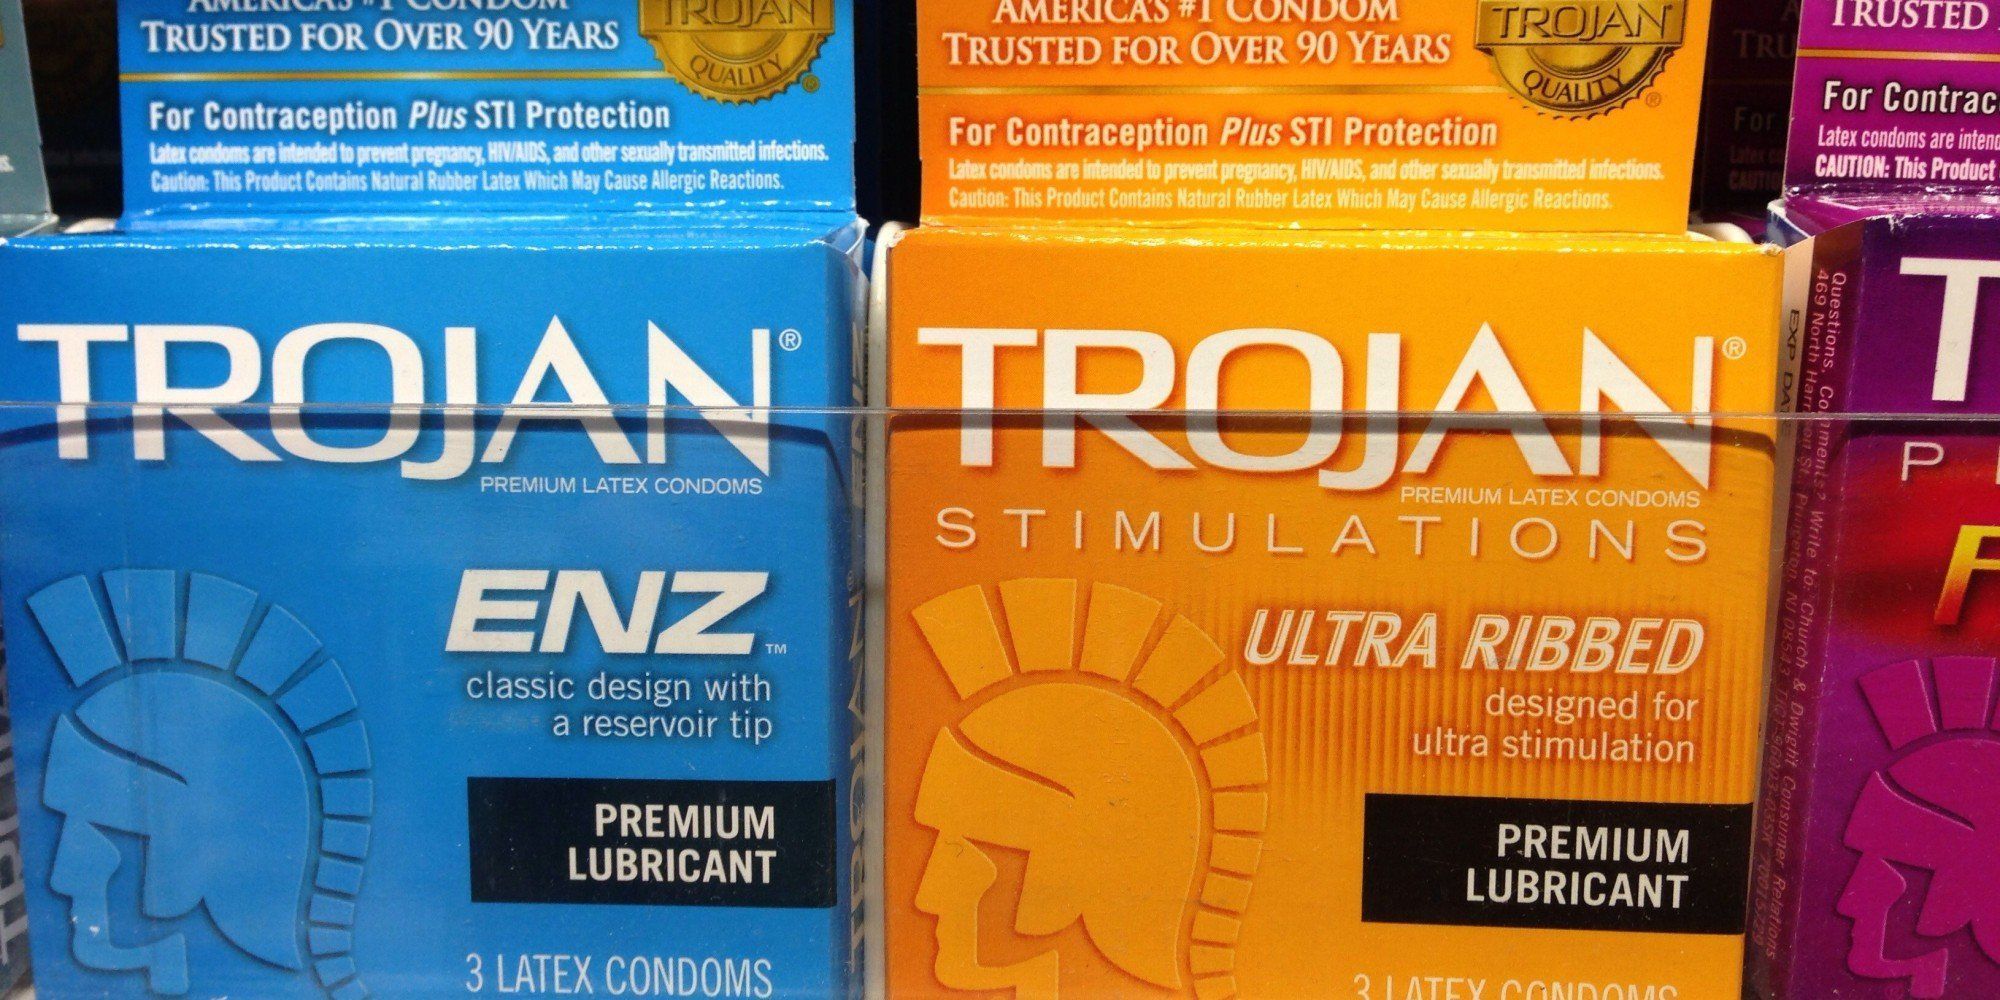 Styles of trojans condoms